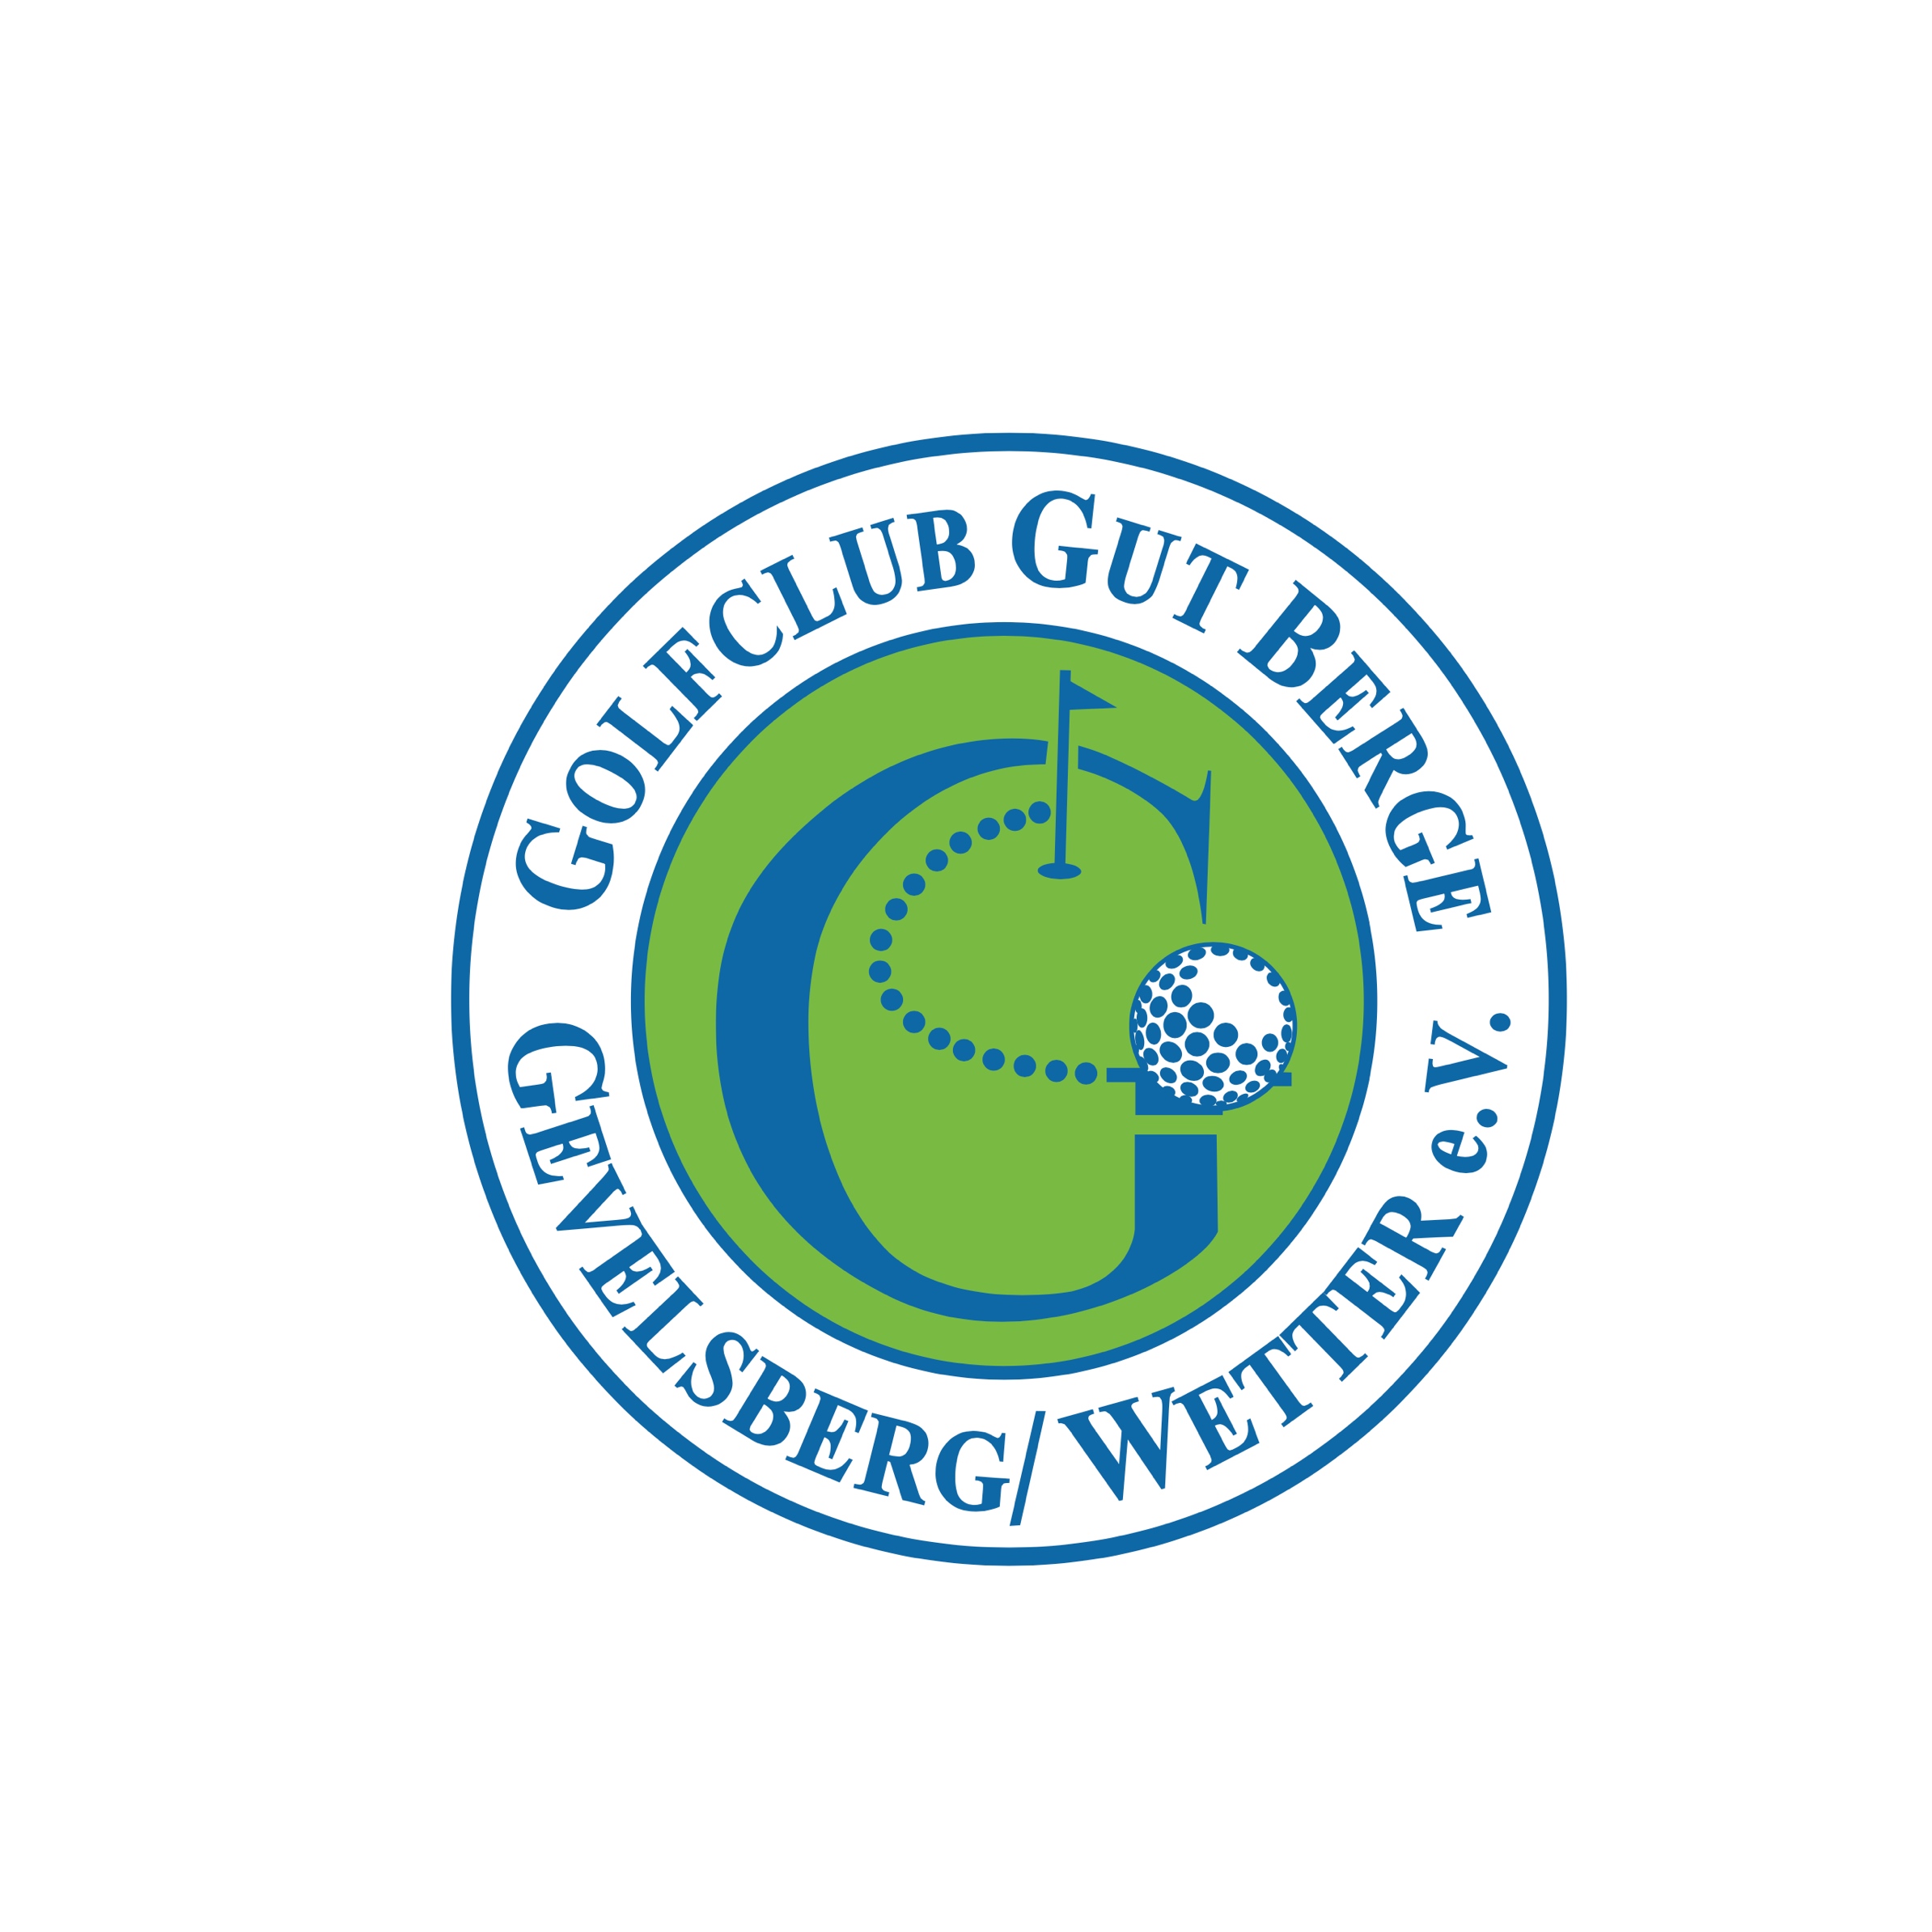 27. Gut Berge (Golfclub Gut Berge Gevelsberg/Wetter e.V.)